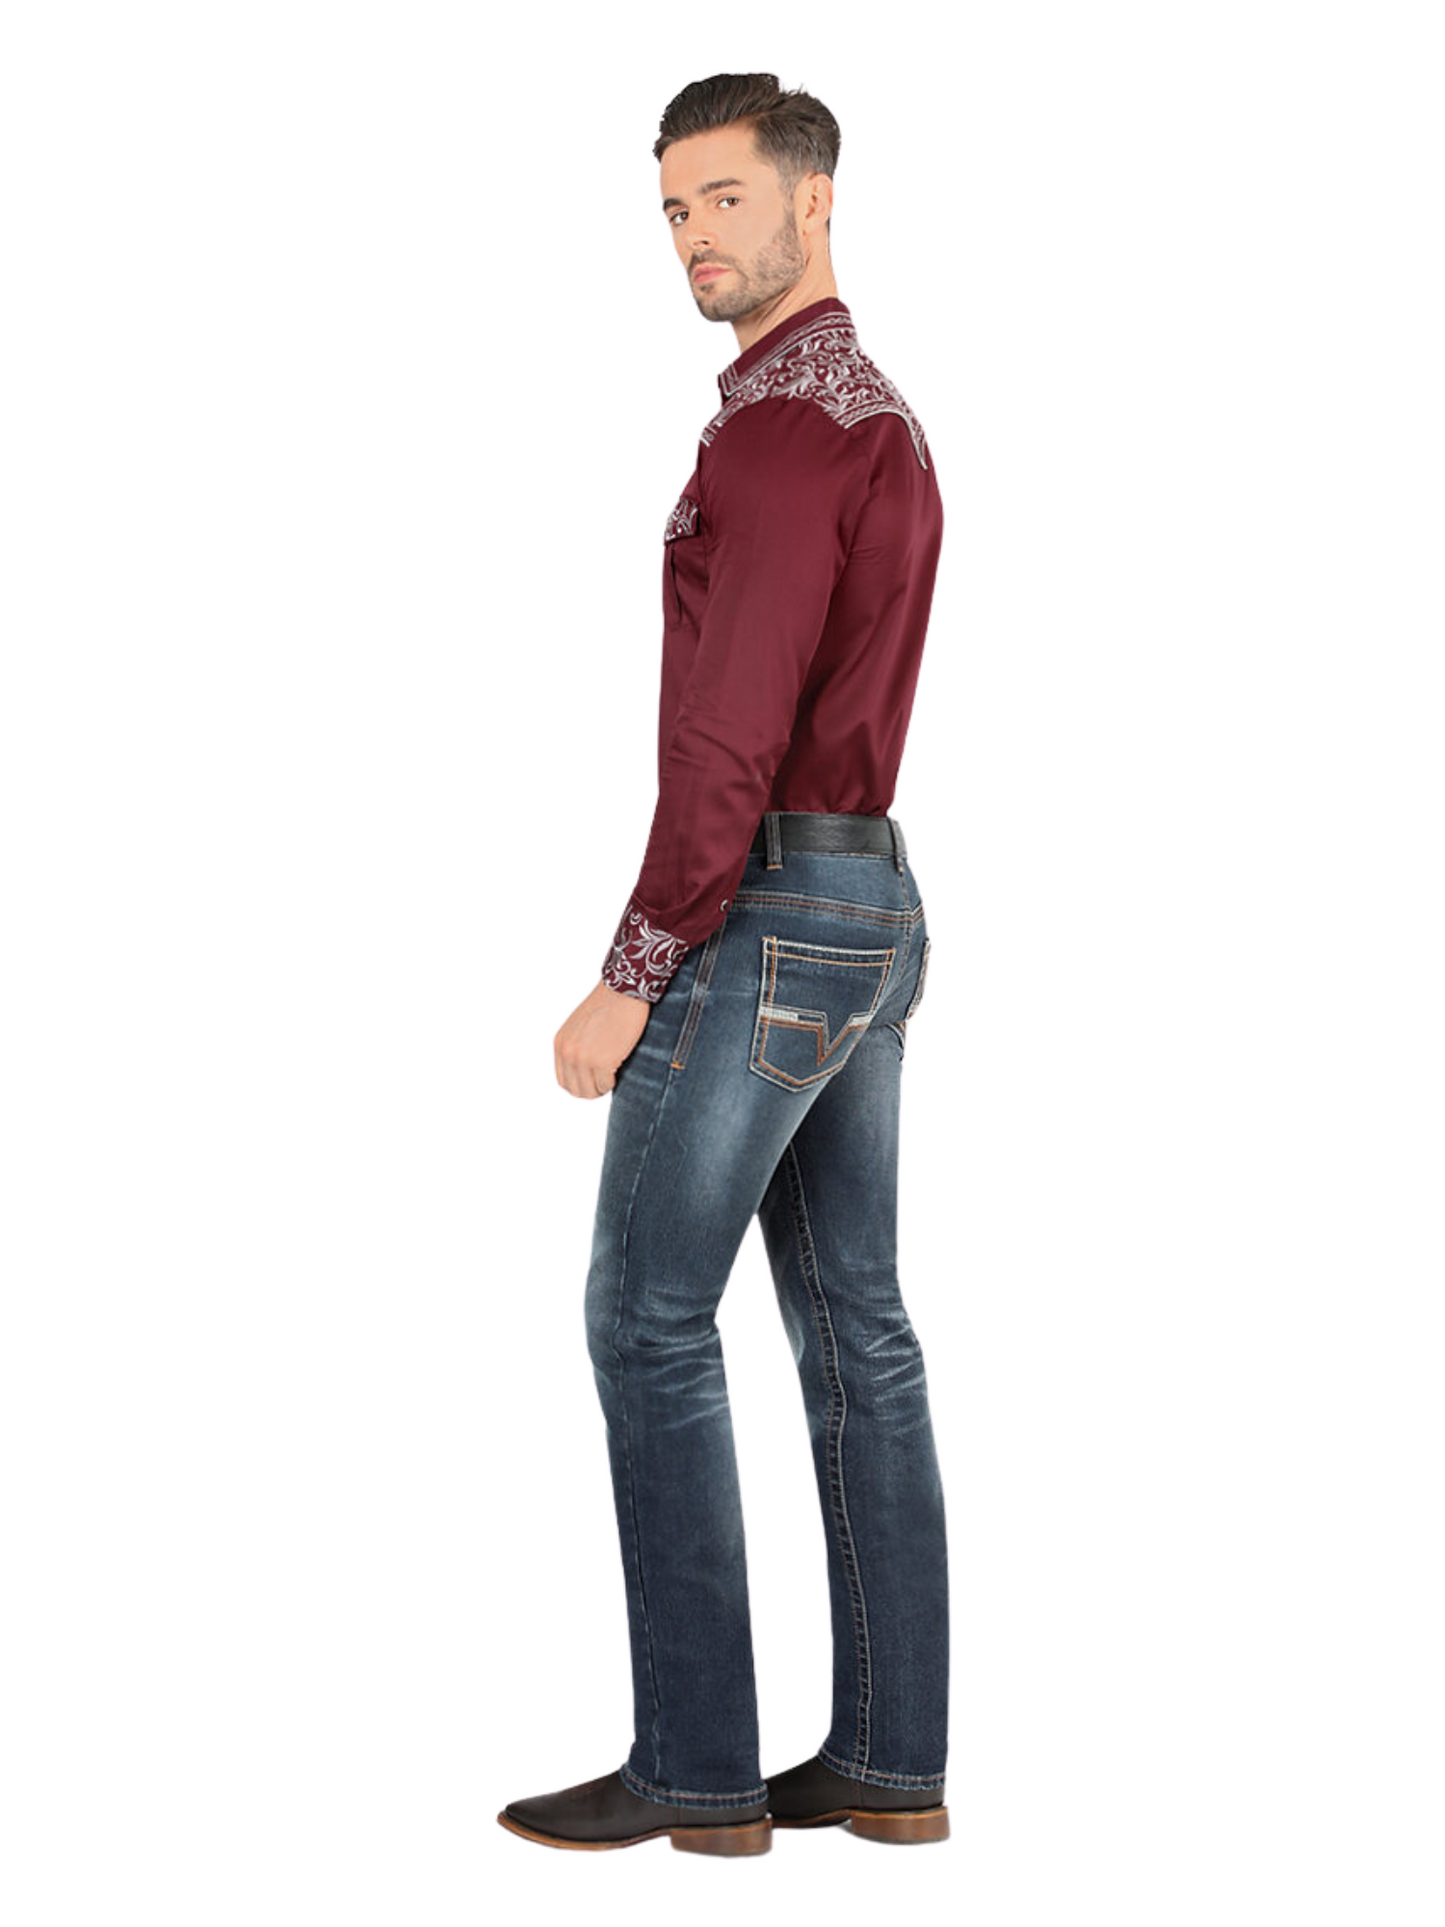 Stretch Denim Jeans for Men 'Montero' - ID: 5307 Denim Jeans Montero